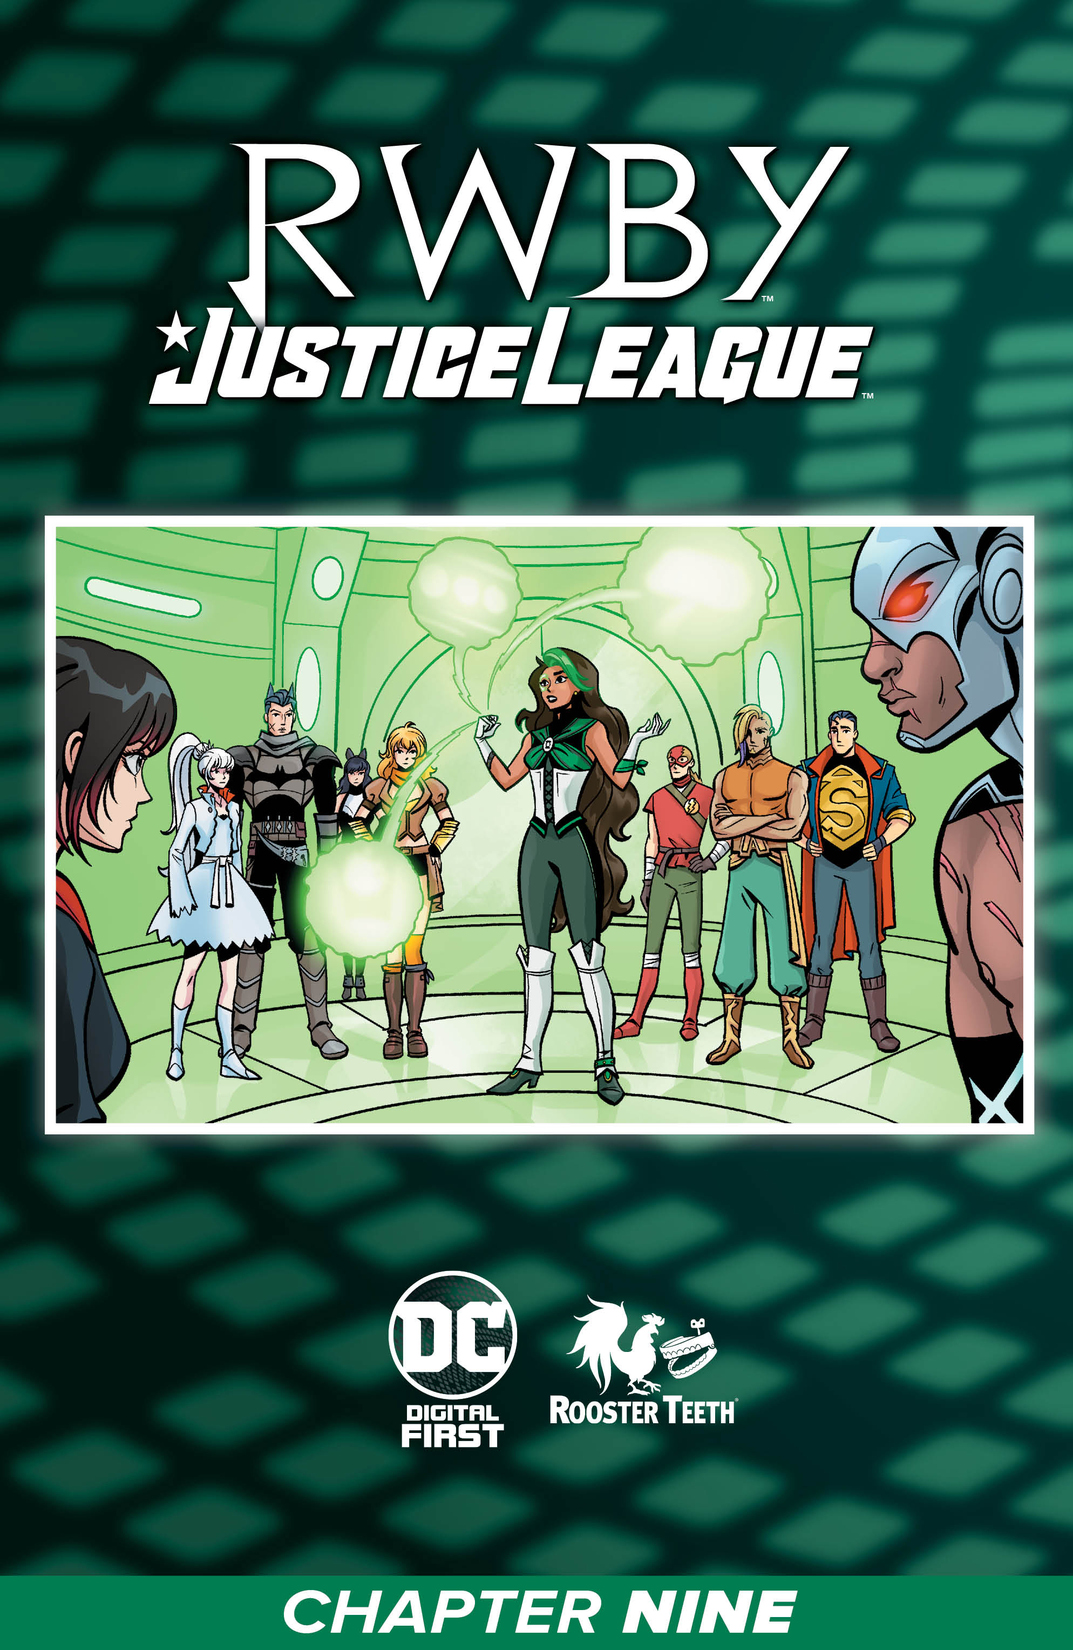 RWBY/Justice League #9 preview images